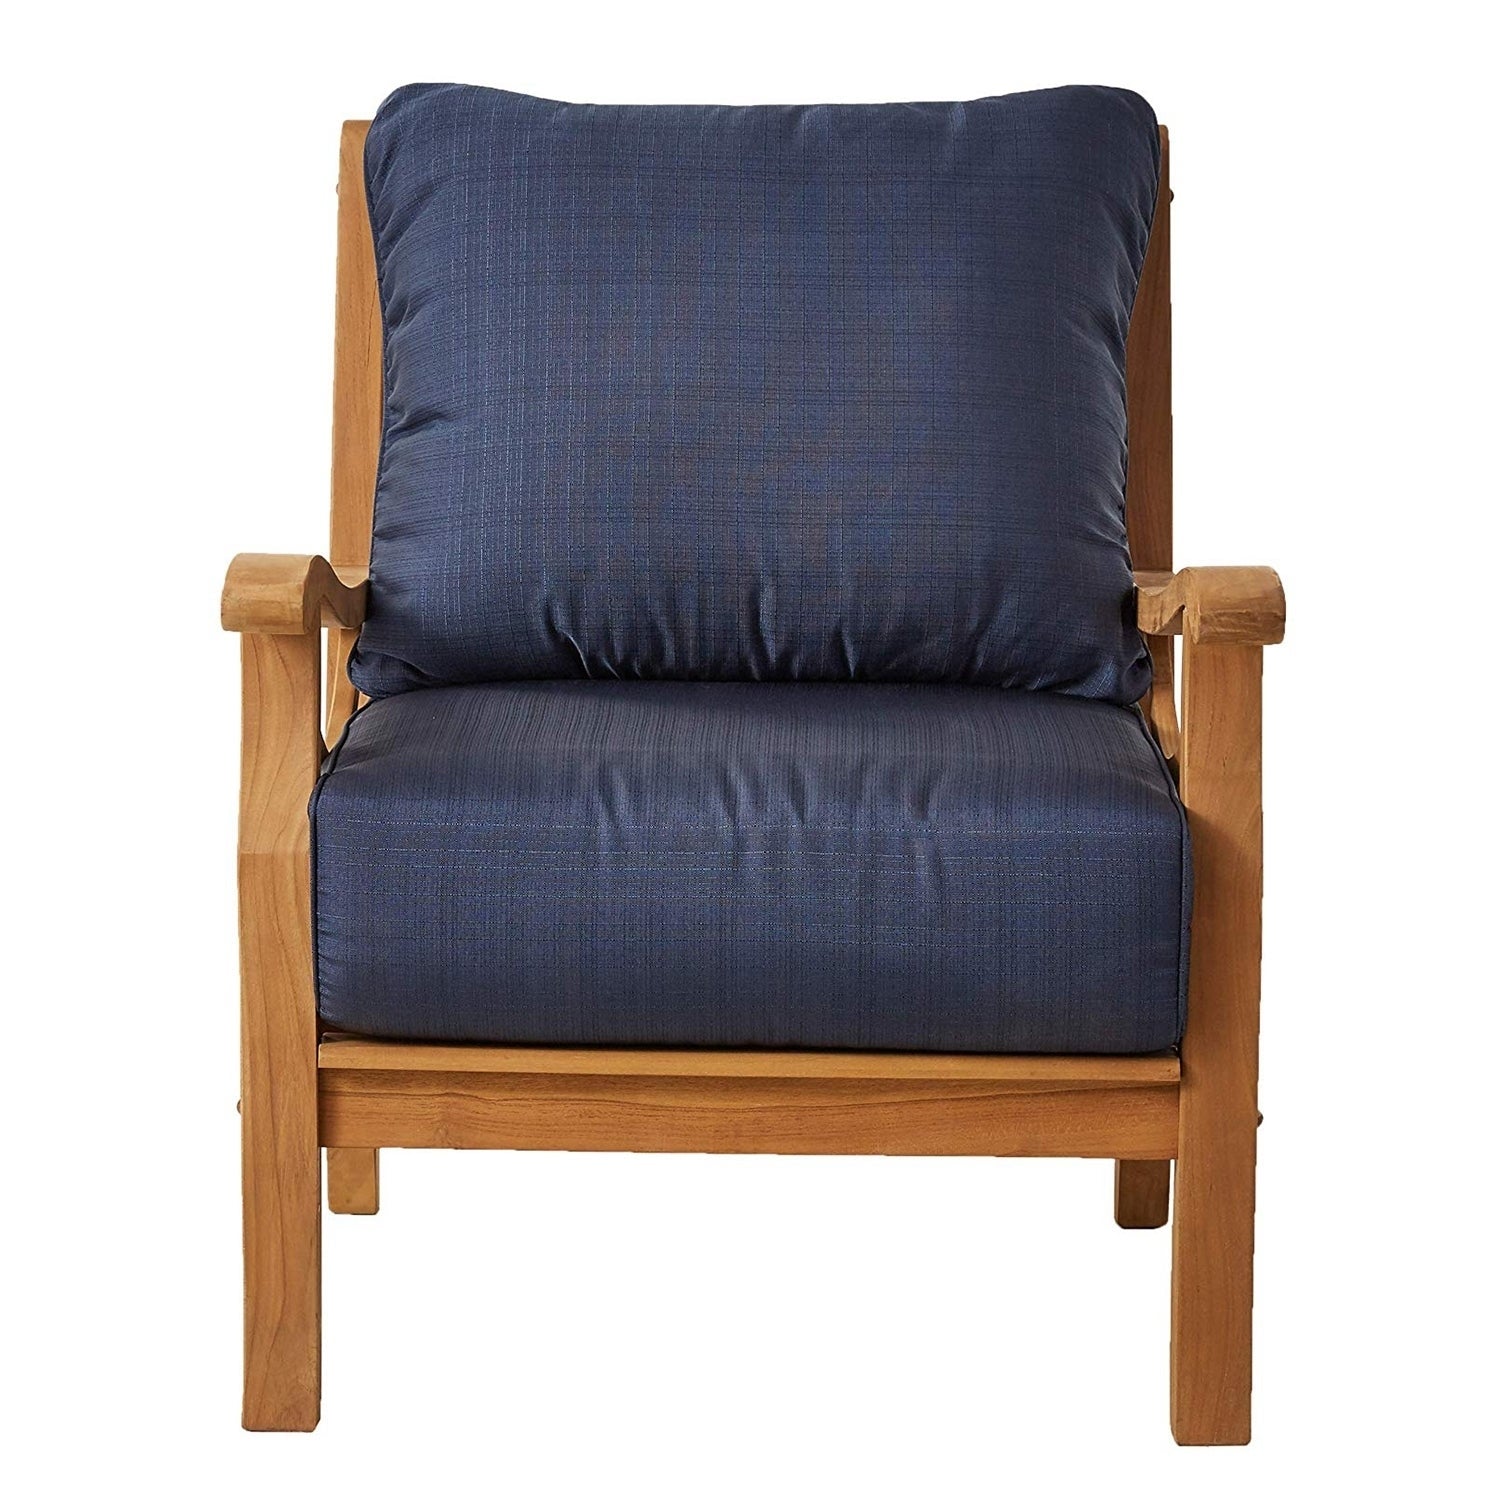 Abbington Teak Wood Outdoor Lounge Chair with Navy Cushion